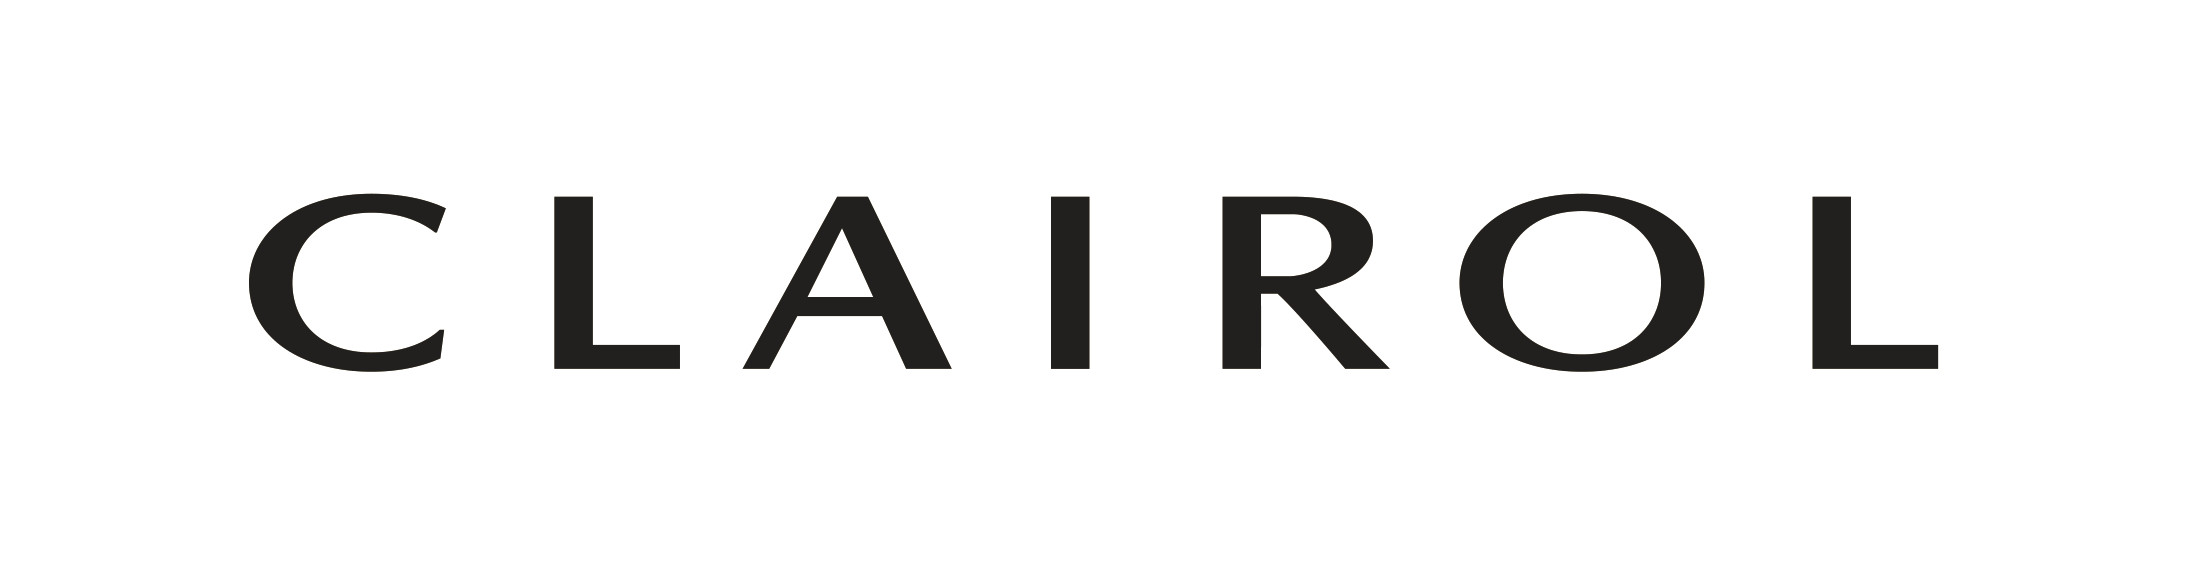 Clairol_Logo.jpg